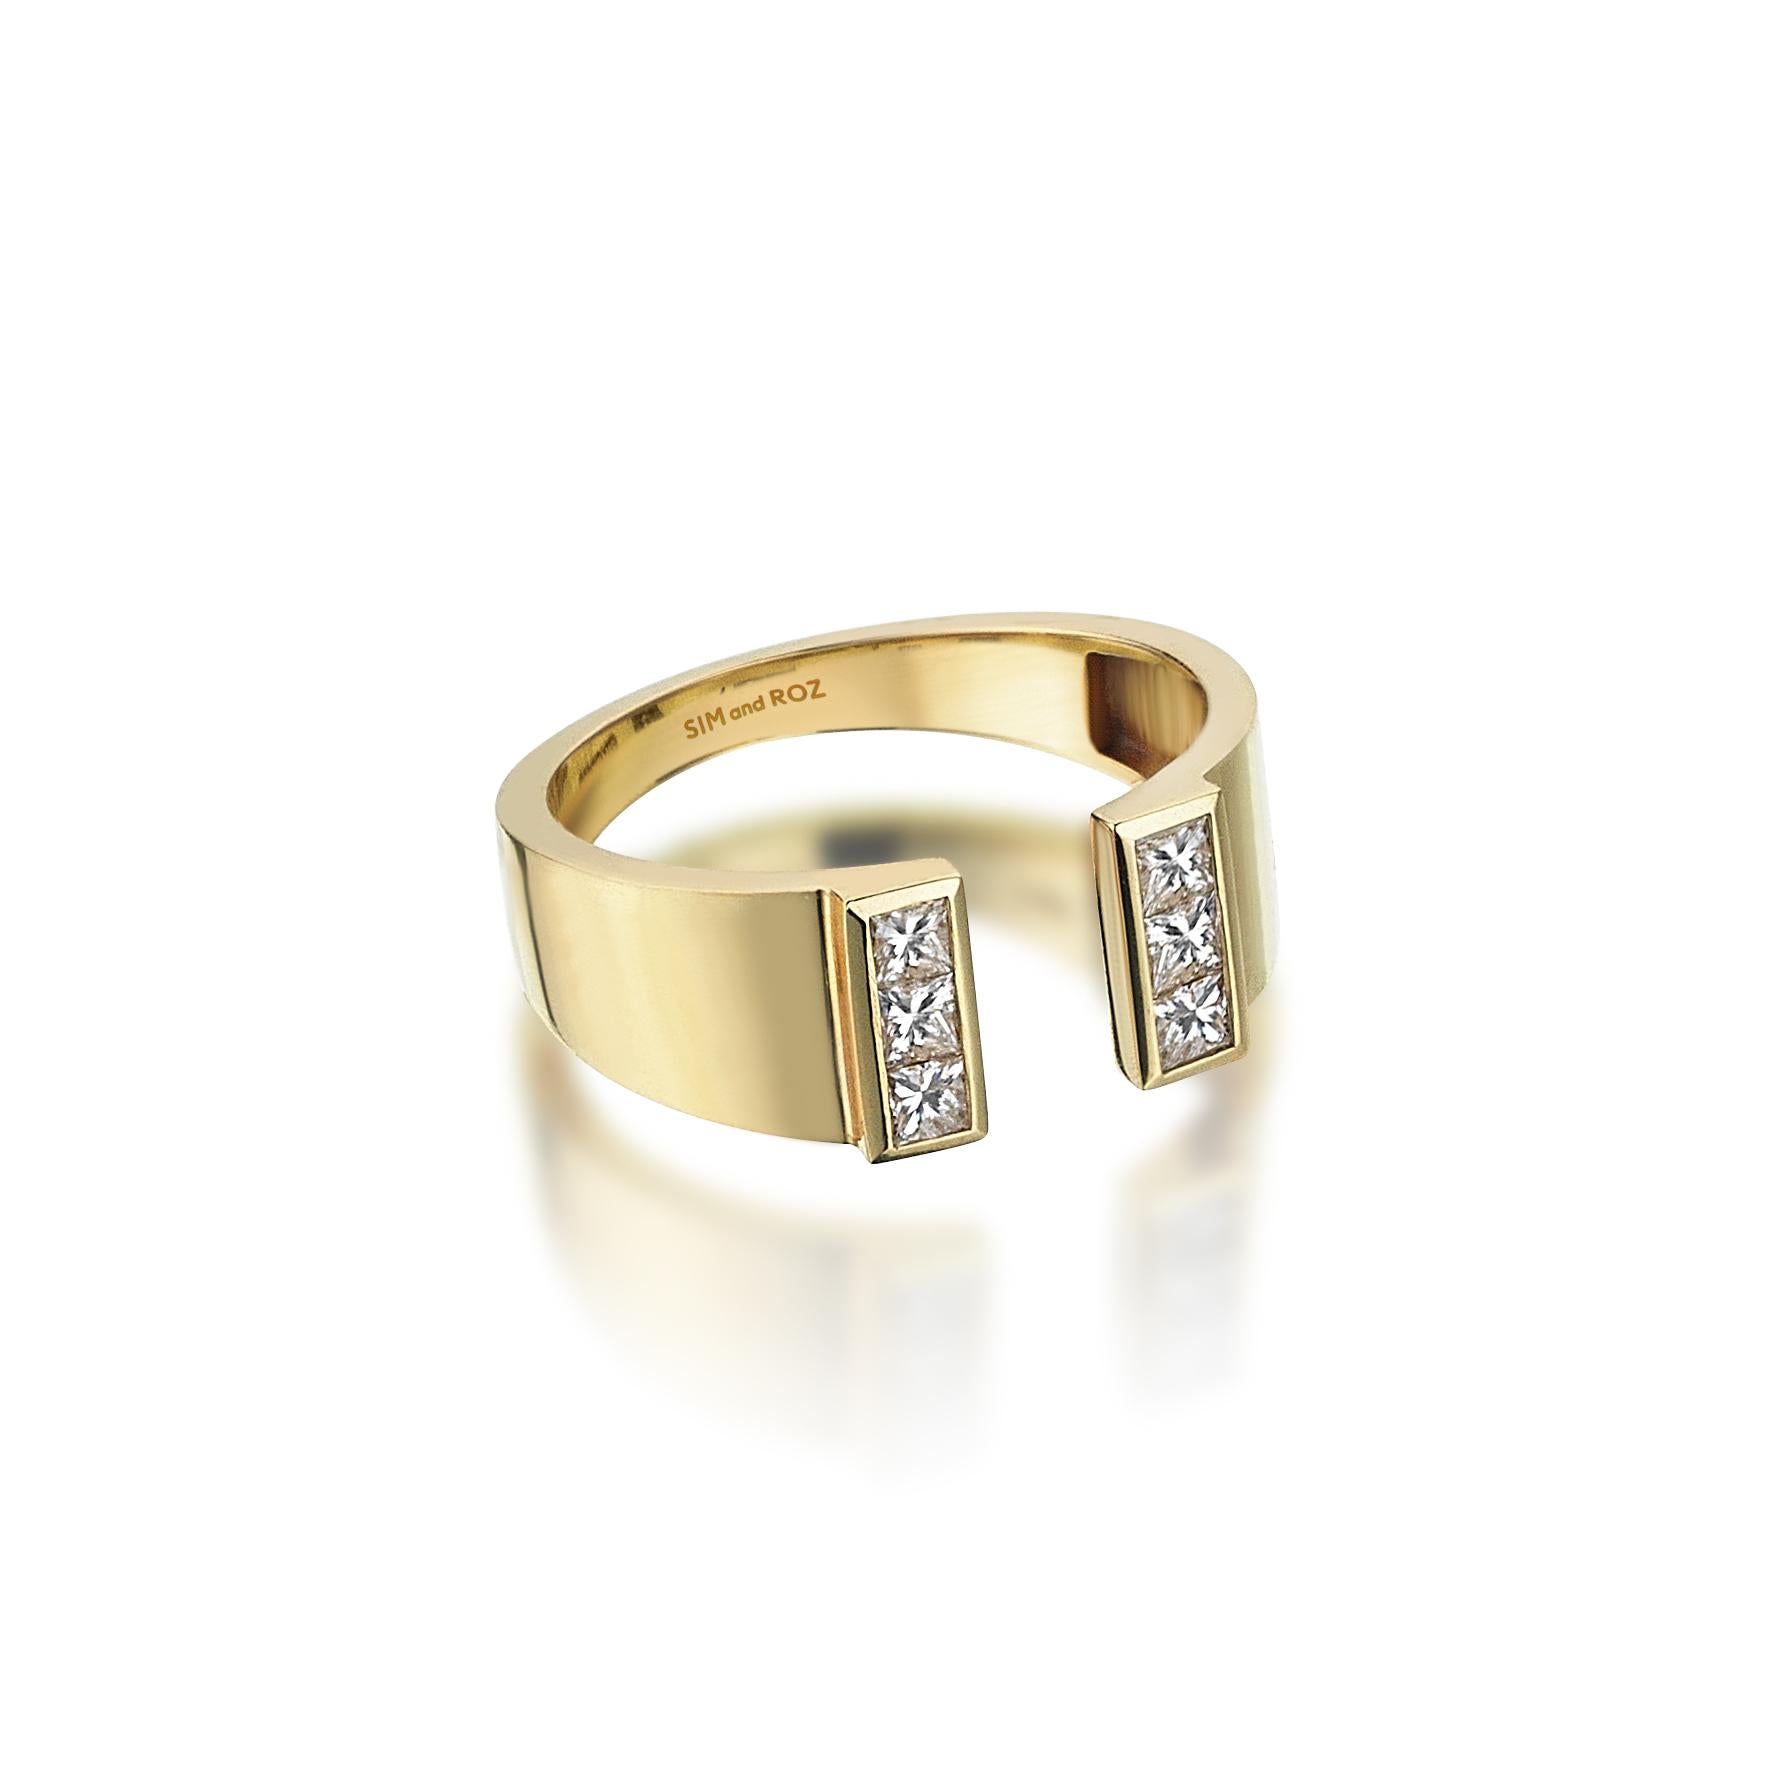 For Sale:  Sim and Roz Yellow Gold Ring 0.41 Carat Princess Cut Diamonds 2